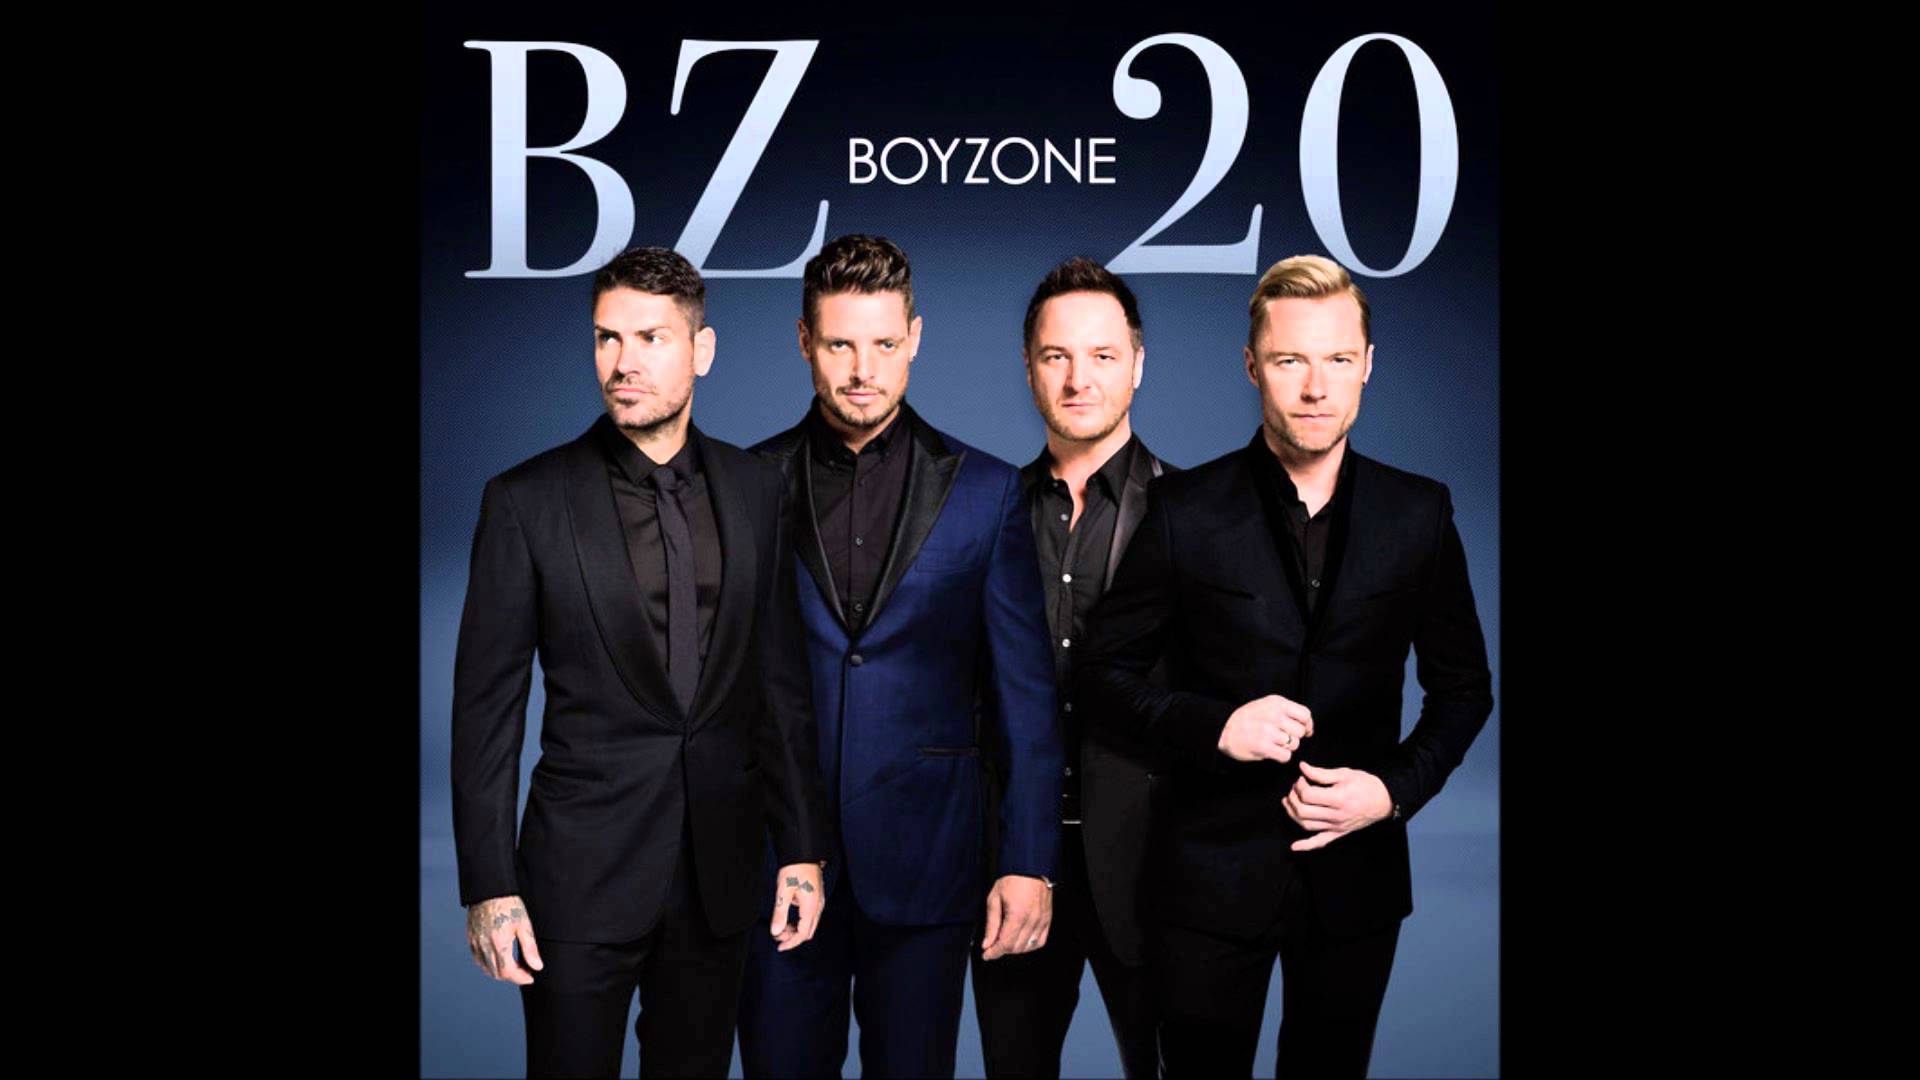 Boyzone - If We Try - YouTube